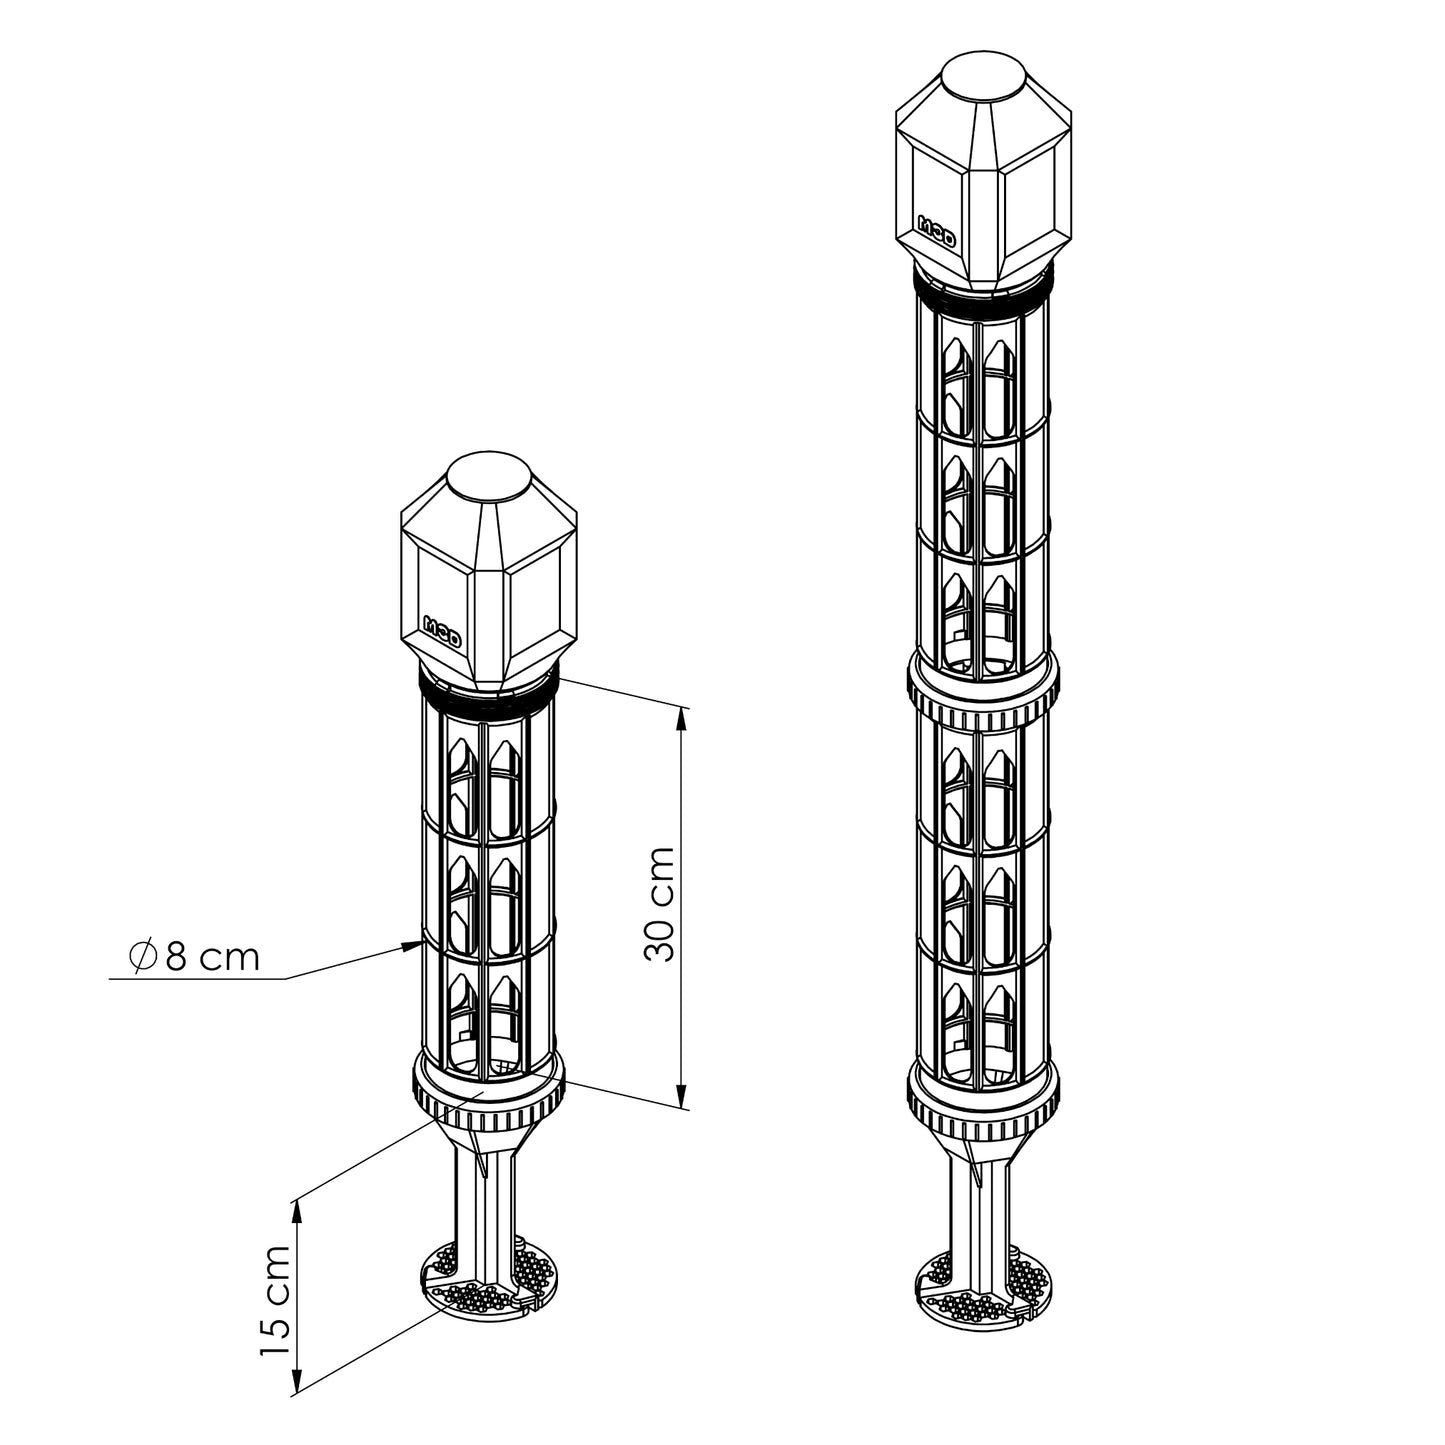 XXL Modular Moss Pole Kit - La Turra (Tower Design)